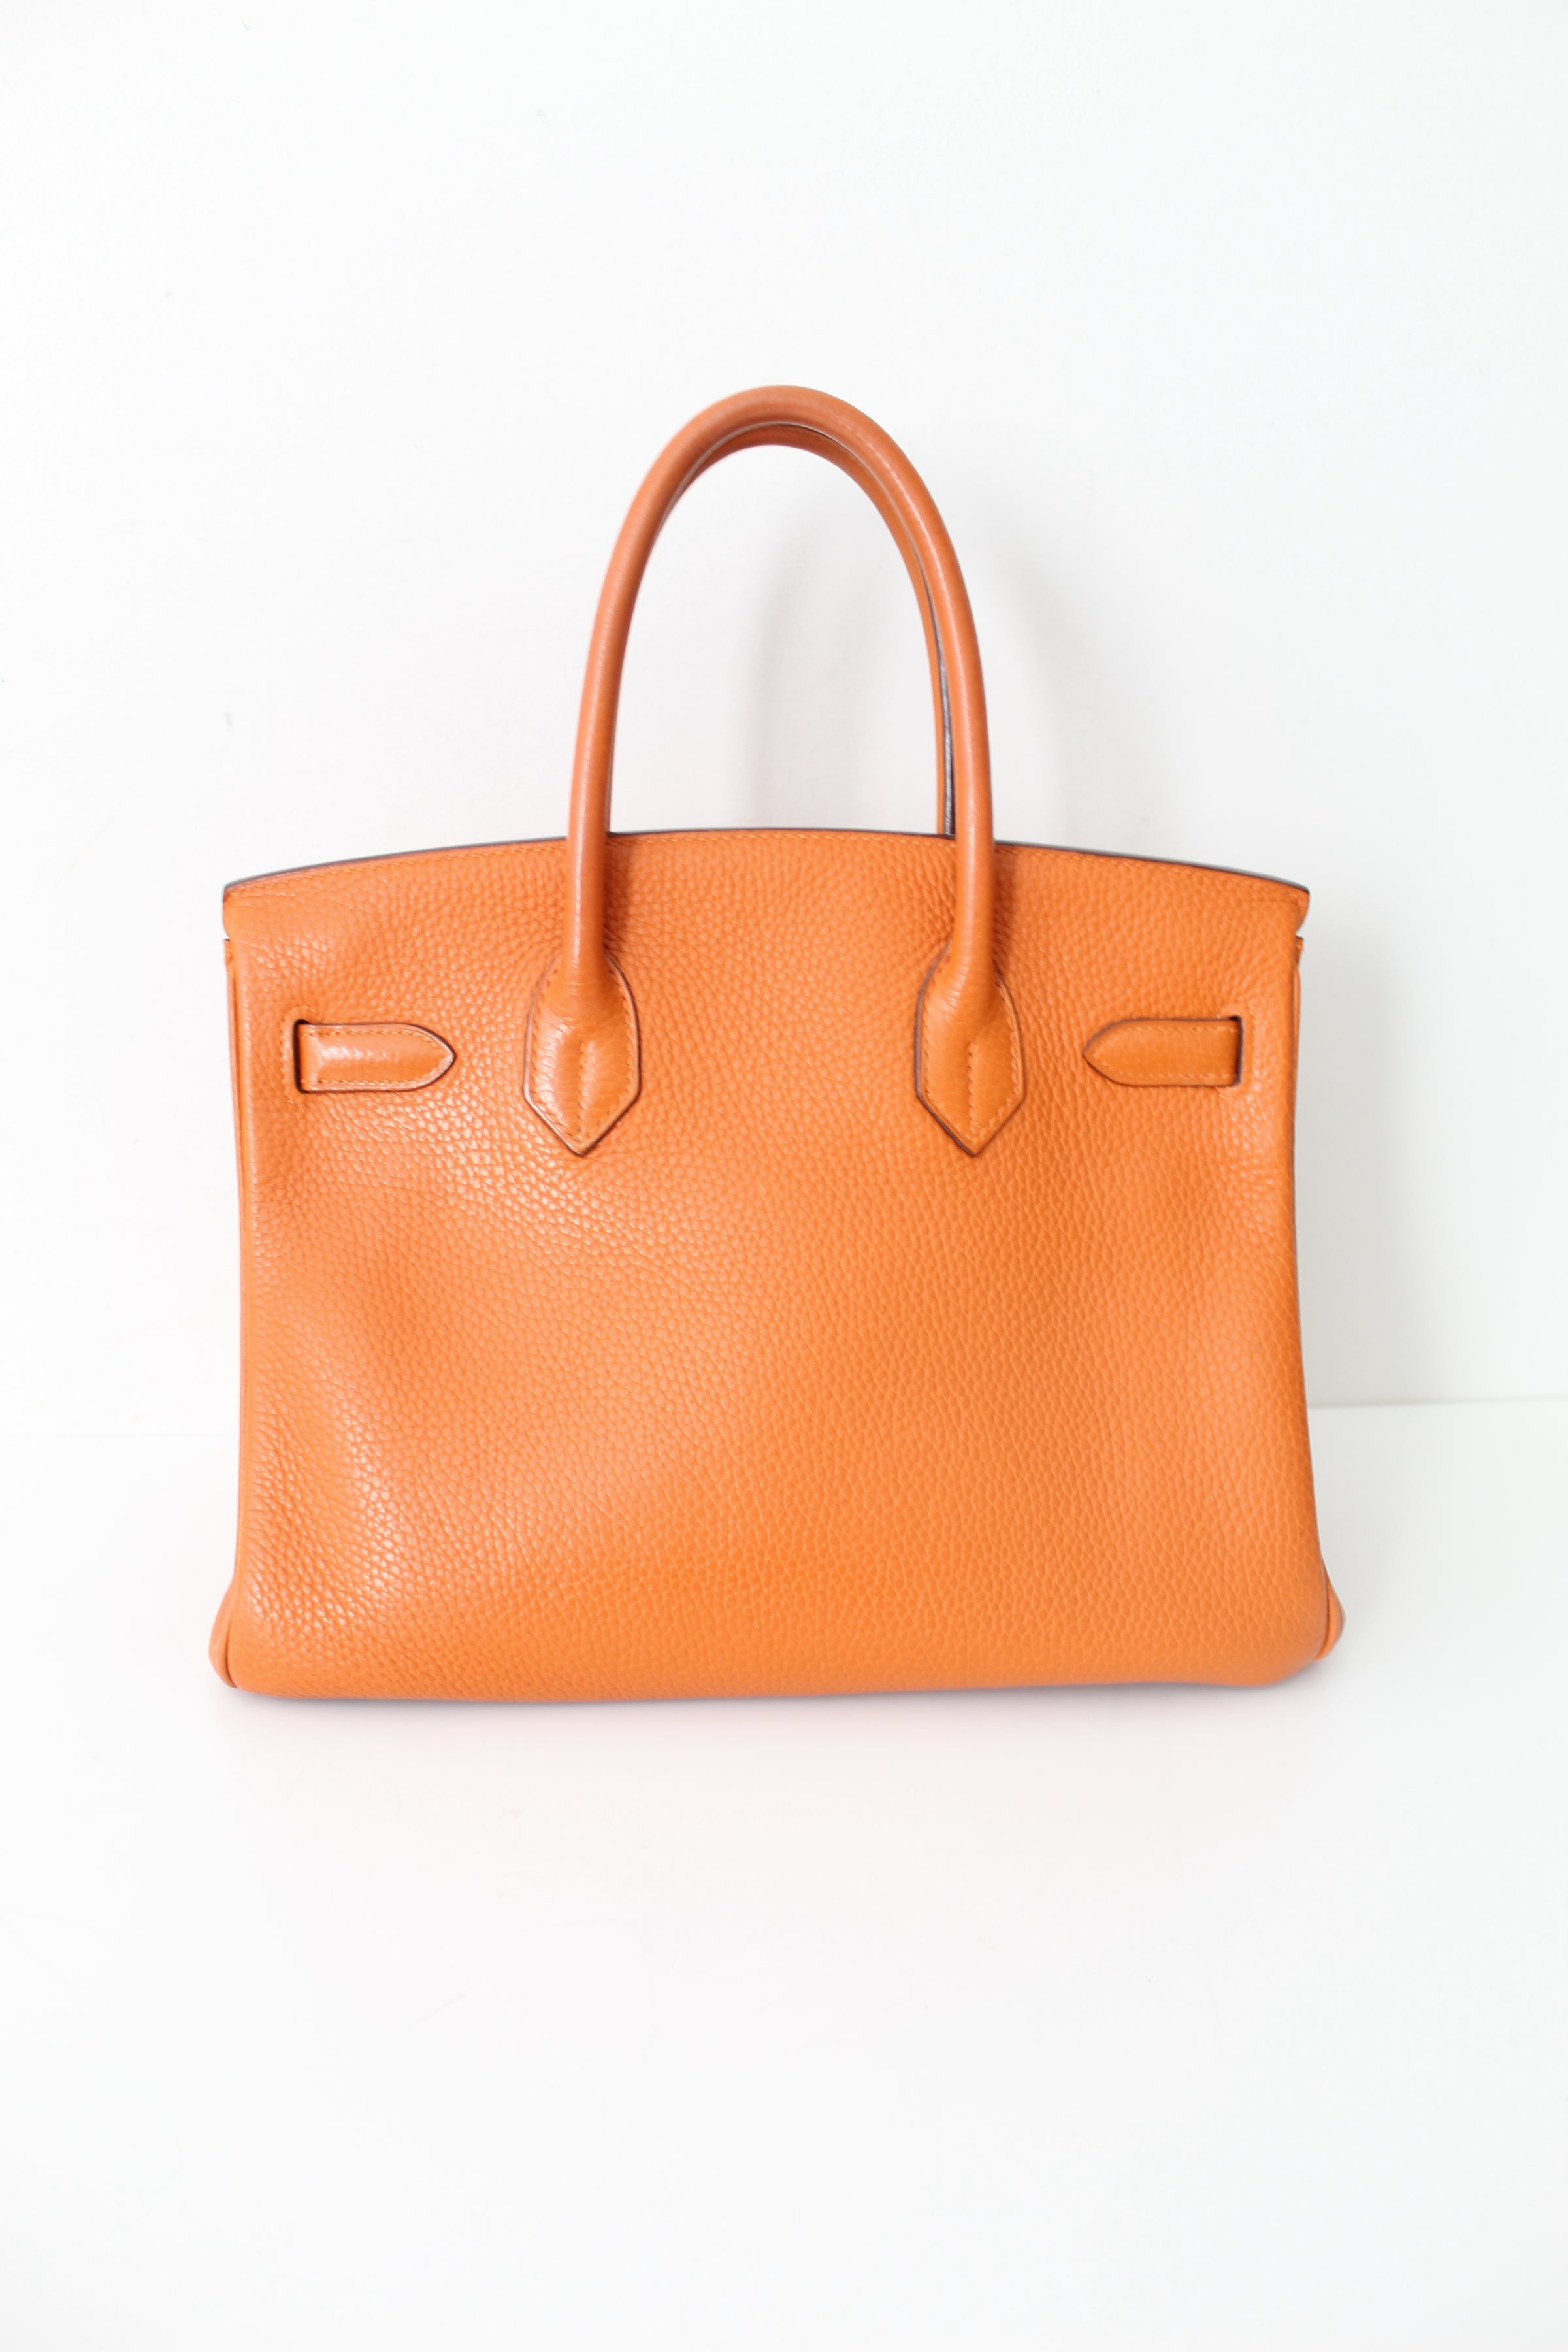 Orange Hermes Bags - 347 For Sale on 1stDibs  orange birkin bag, hermes  orange handbag, hermes kelly orange